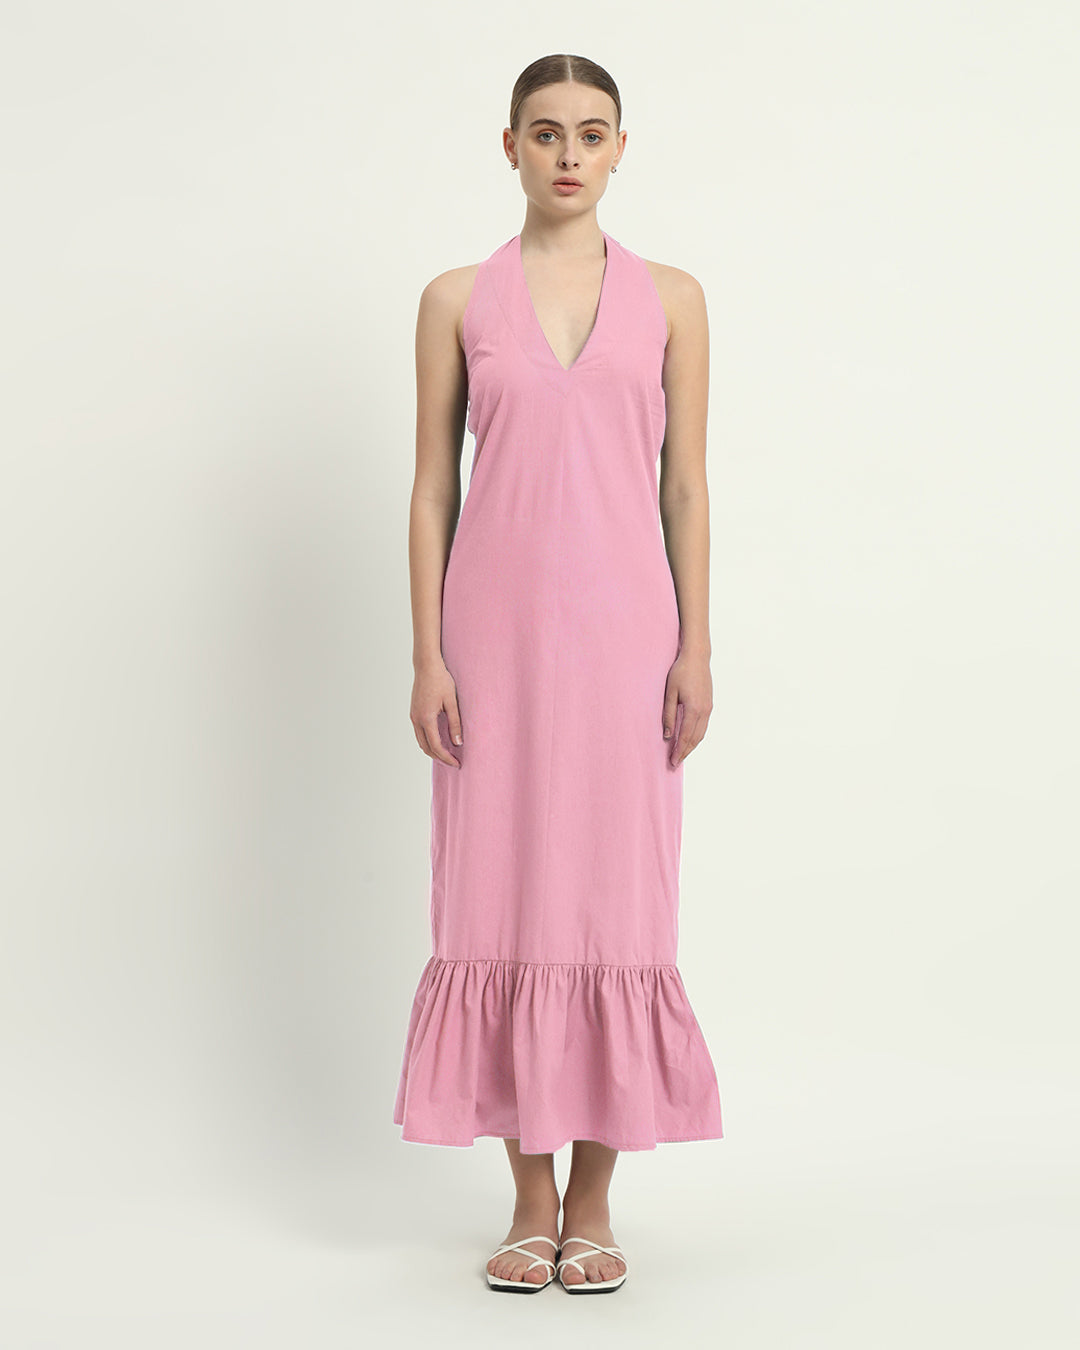 The Wellsville Fondant Pink Cotton Dress